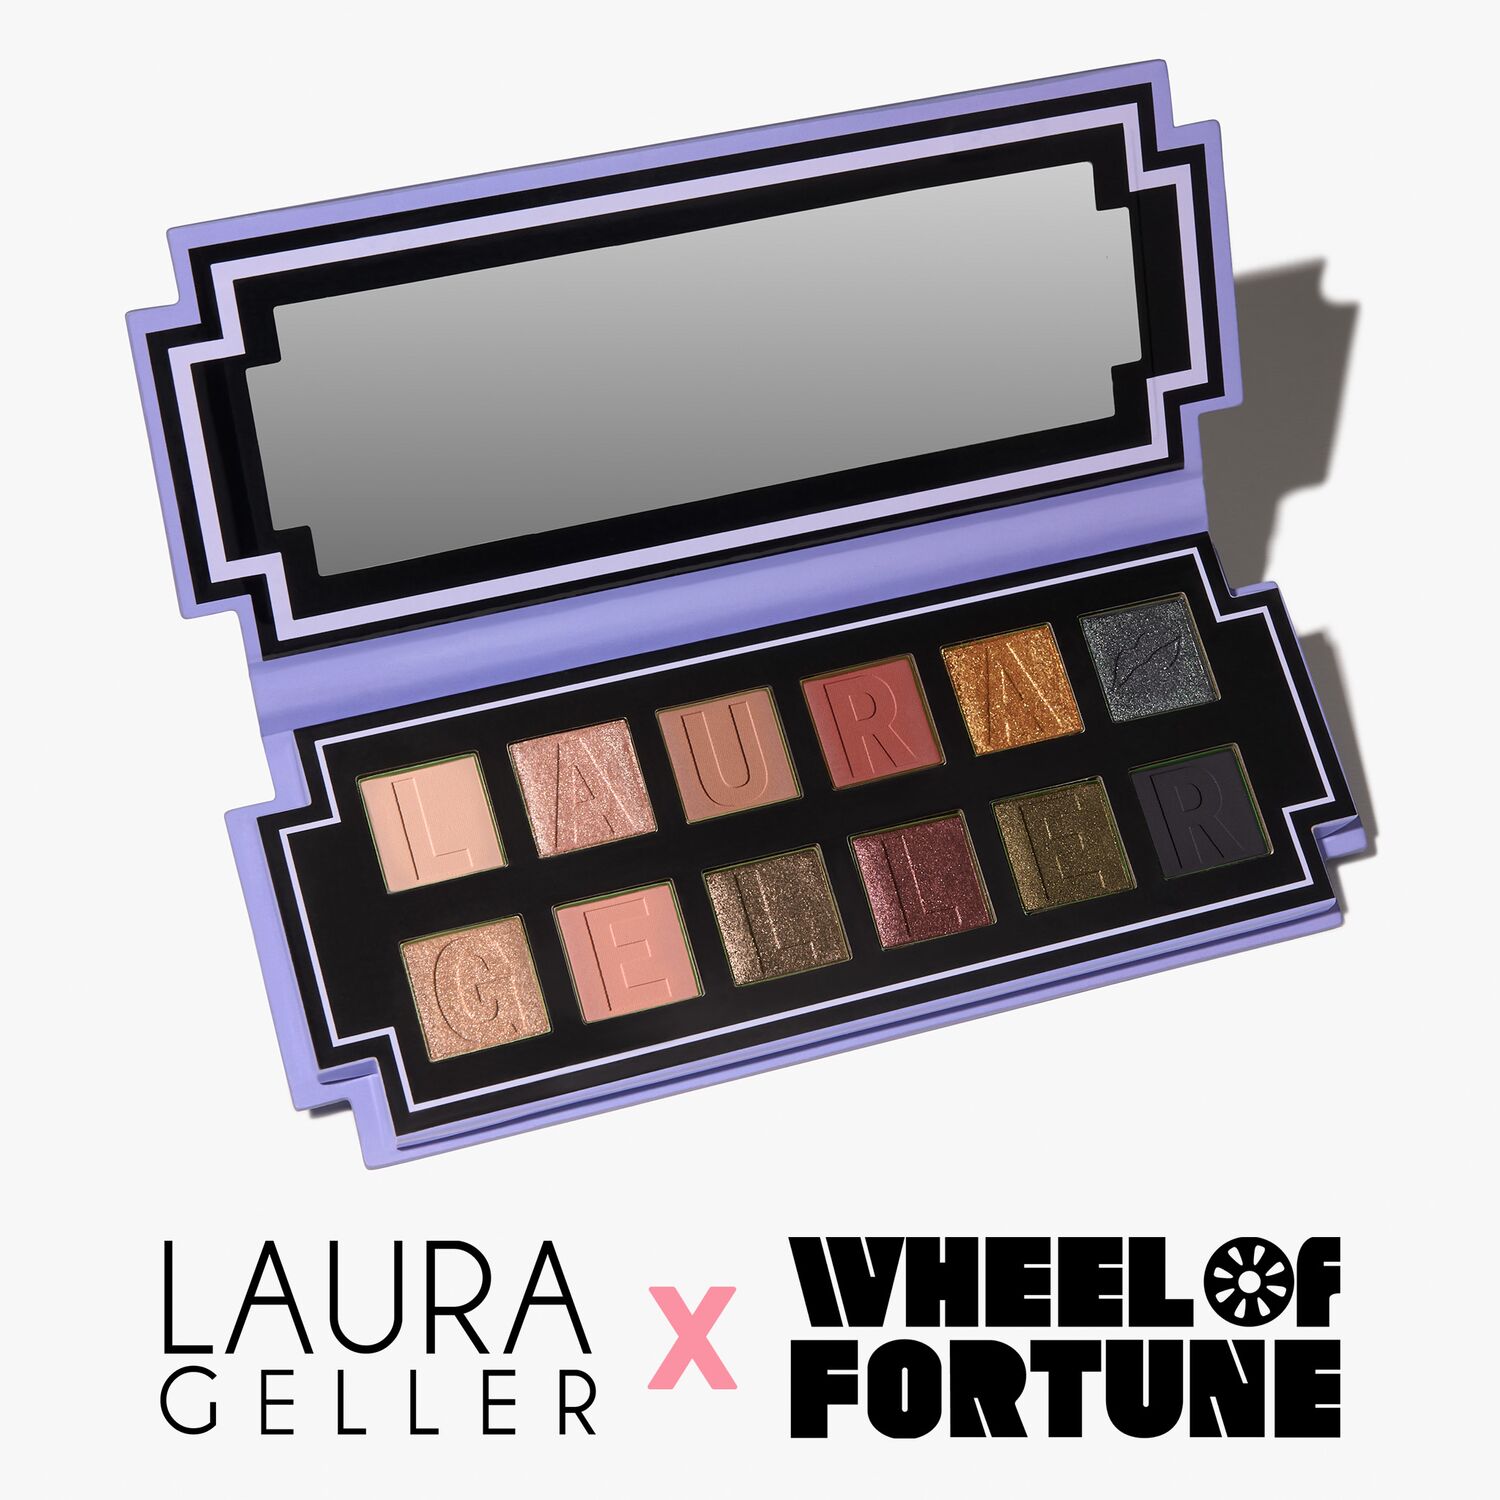 Laura Geller New York Baked Eyeshadow Quad, Tropic Hues | Crease & Smudge Proof | 4 Pigmented Eyeshadows Blendable Natural Look